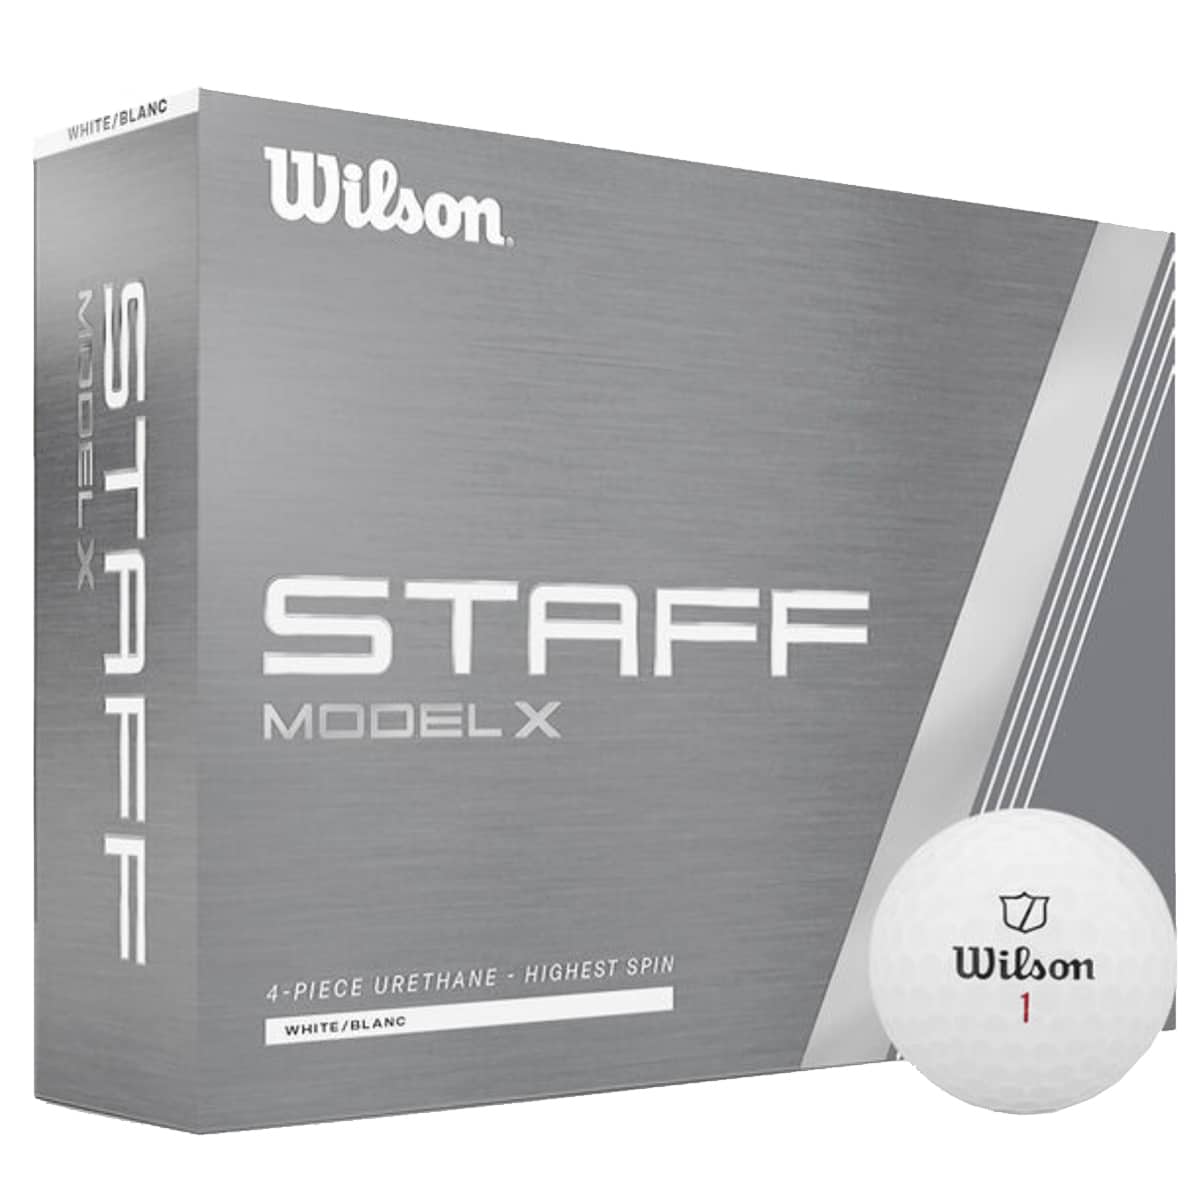 Wilson Staff Model X Ball Review